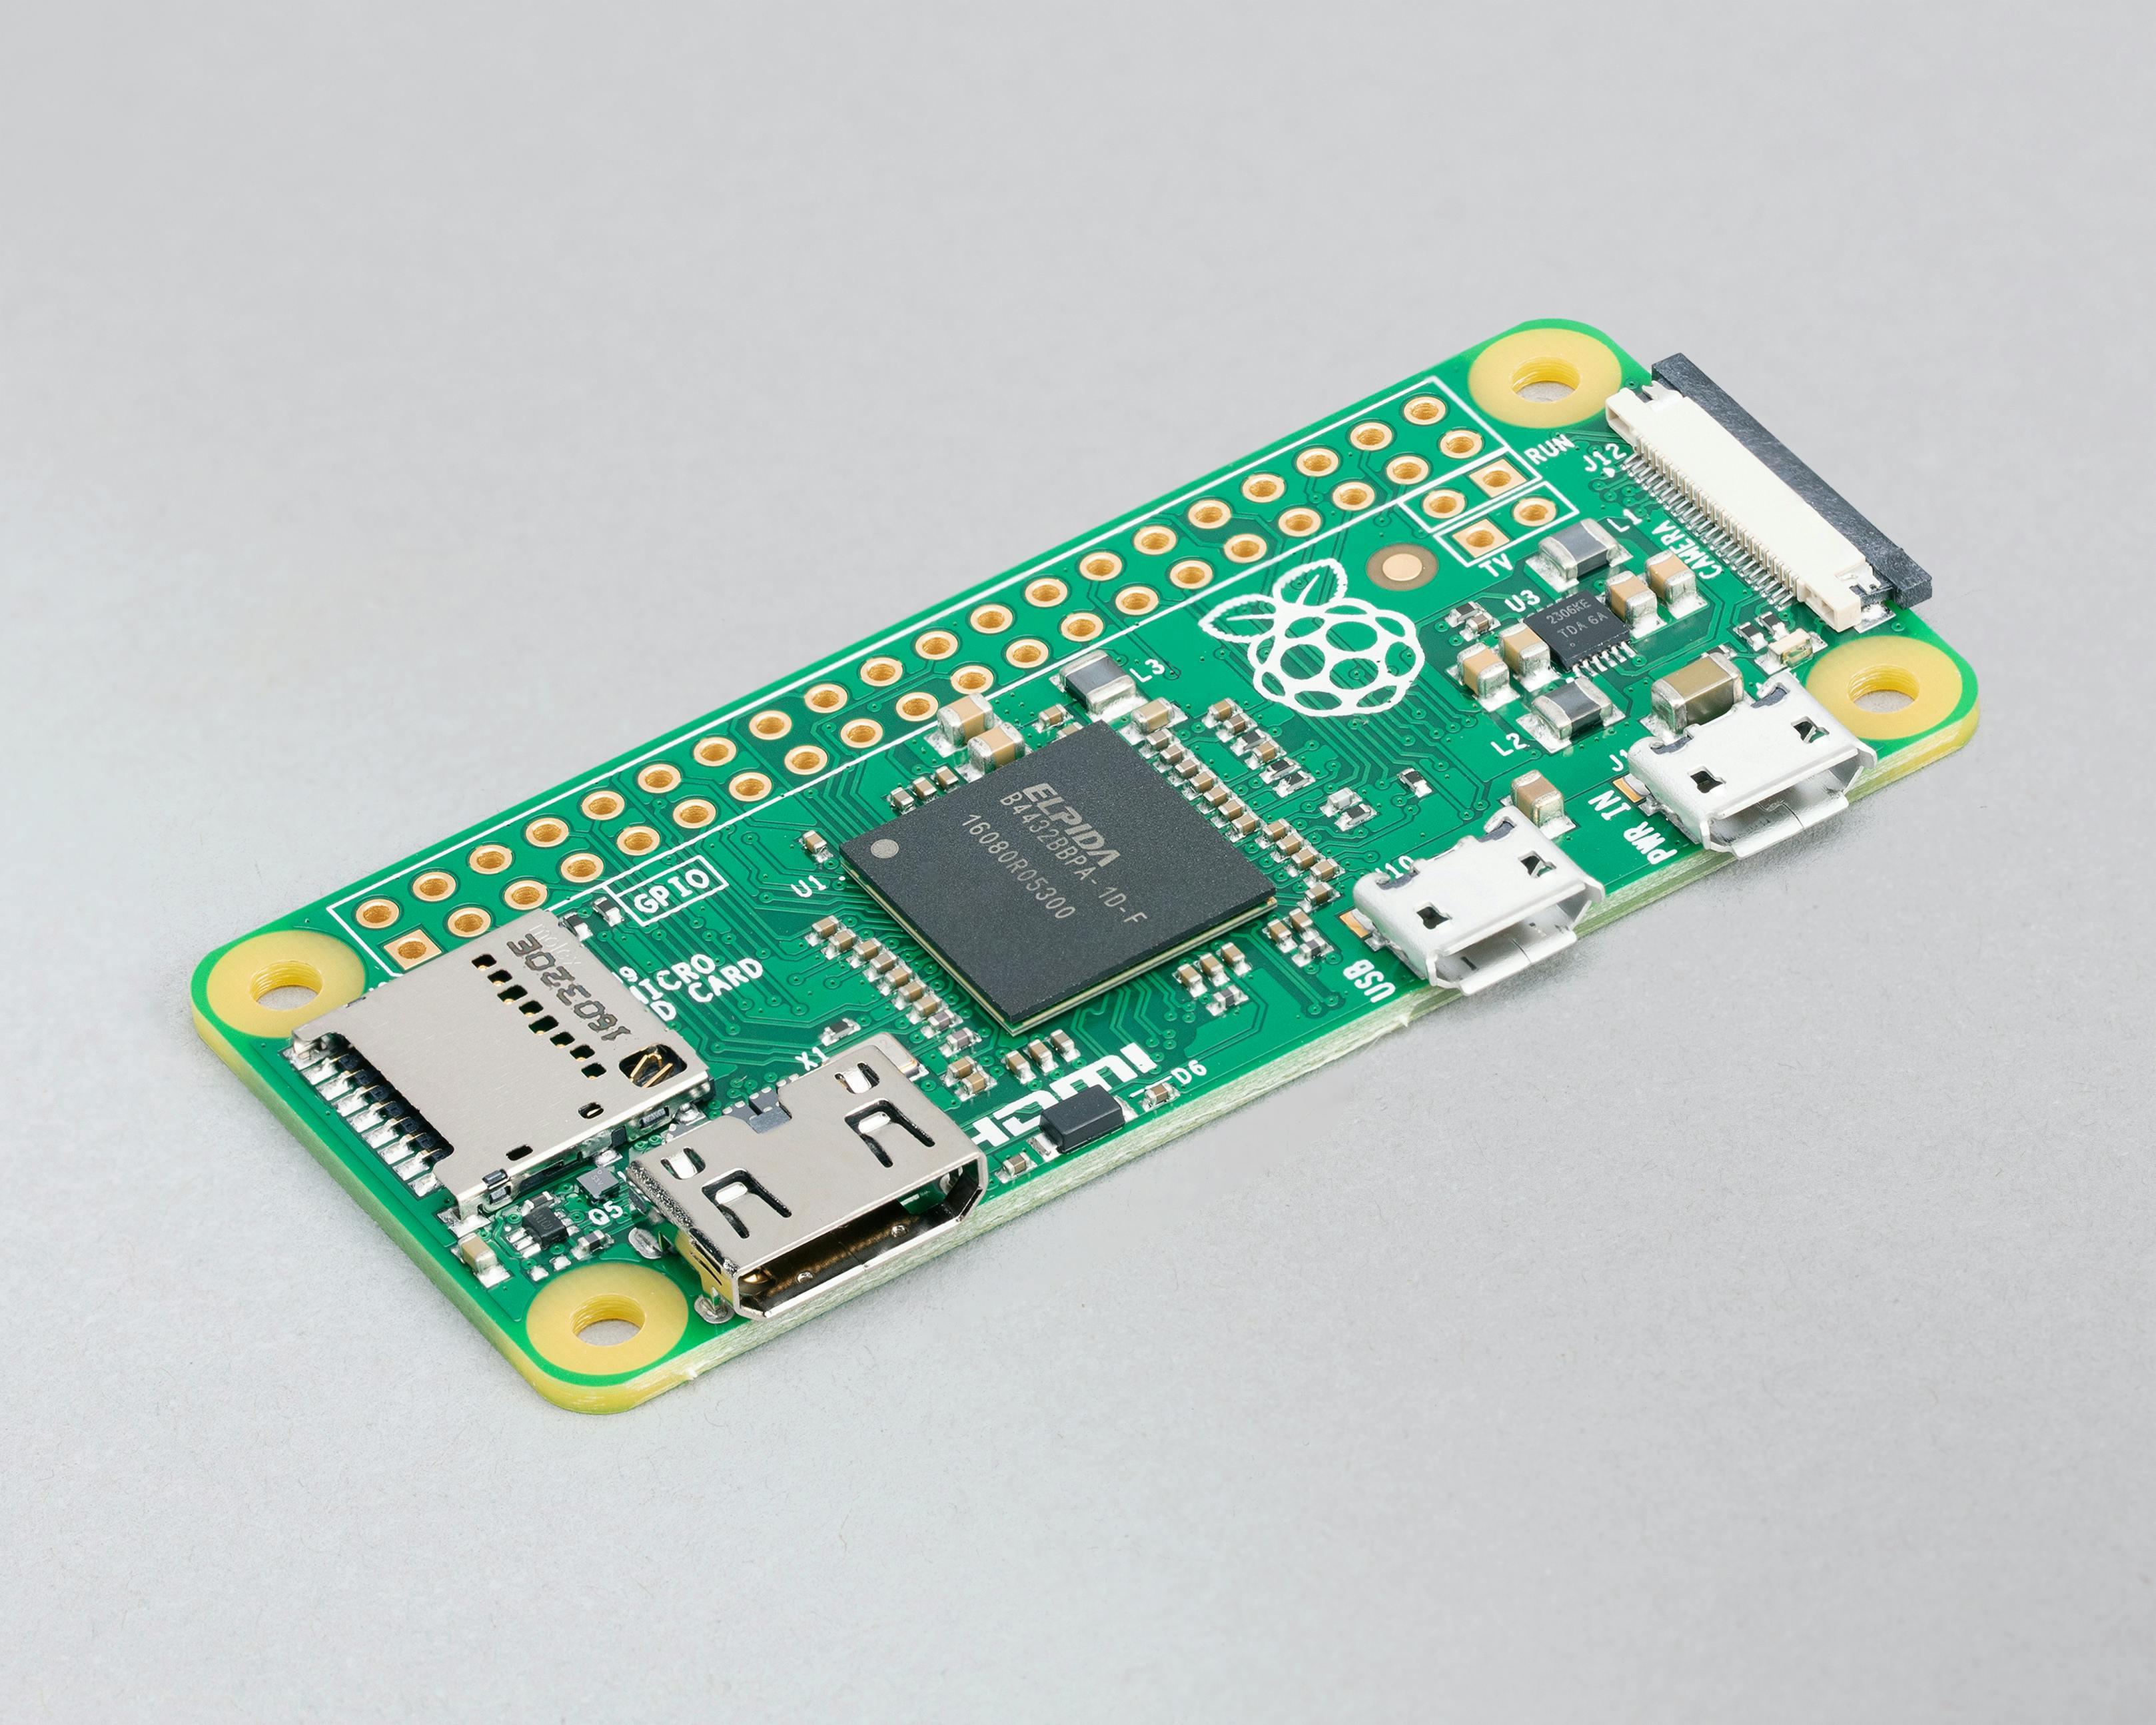 Product: Buy a Raspberry Pi Zero – Raspberry Pi